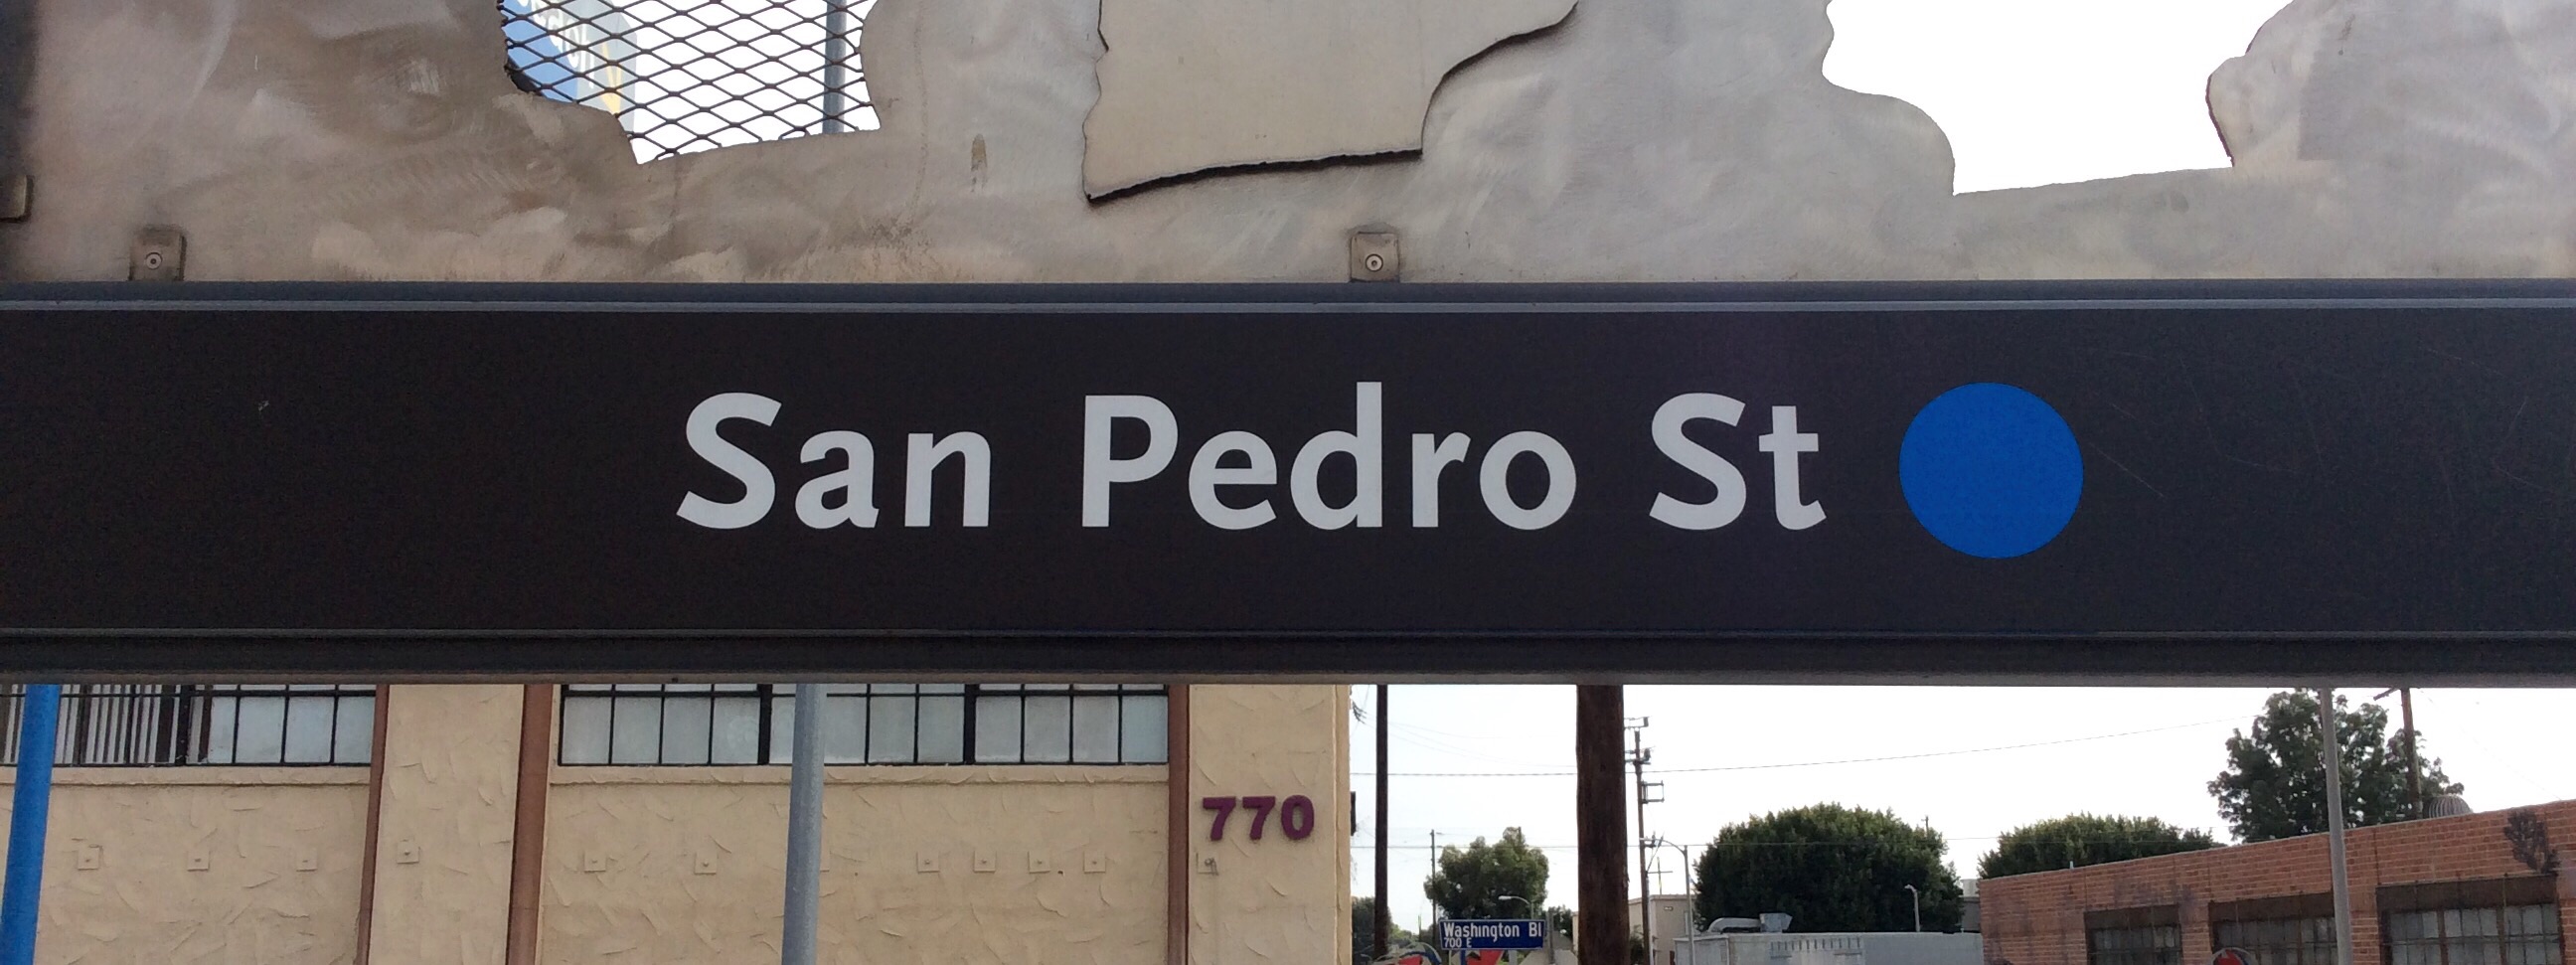 File:HSY- Los Angeles Metro, San Pedro Street, Signage.jpg ...